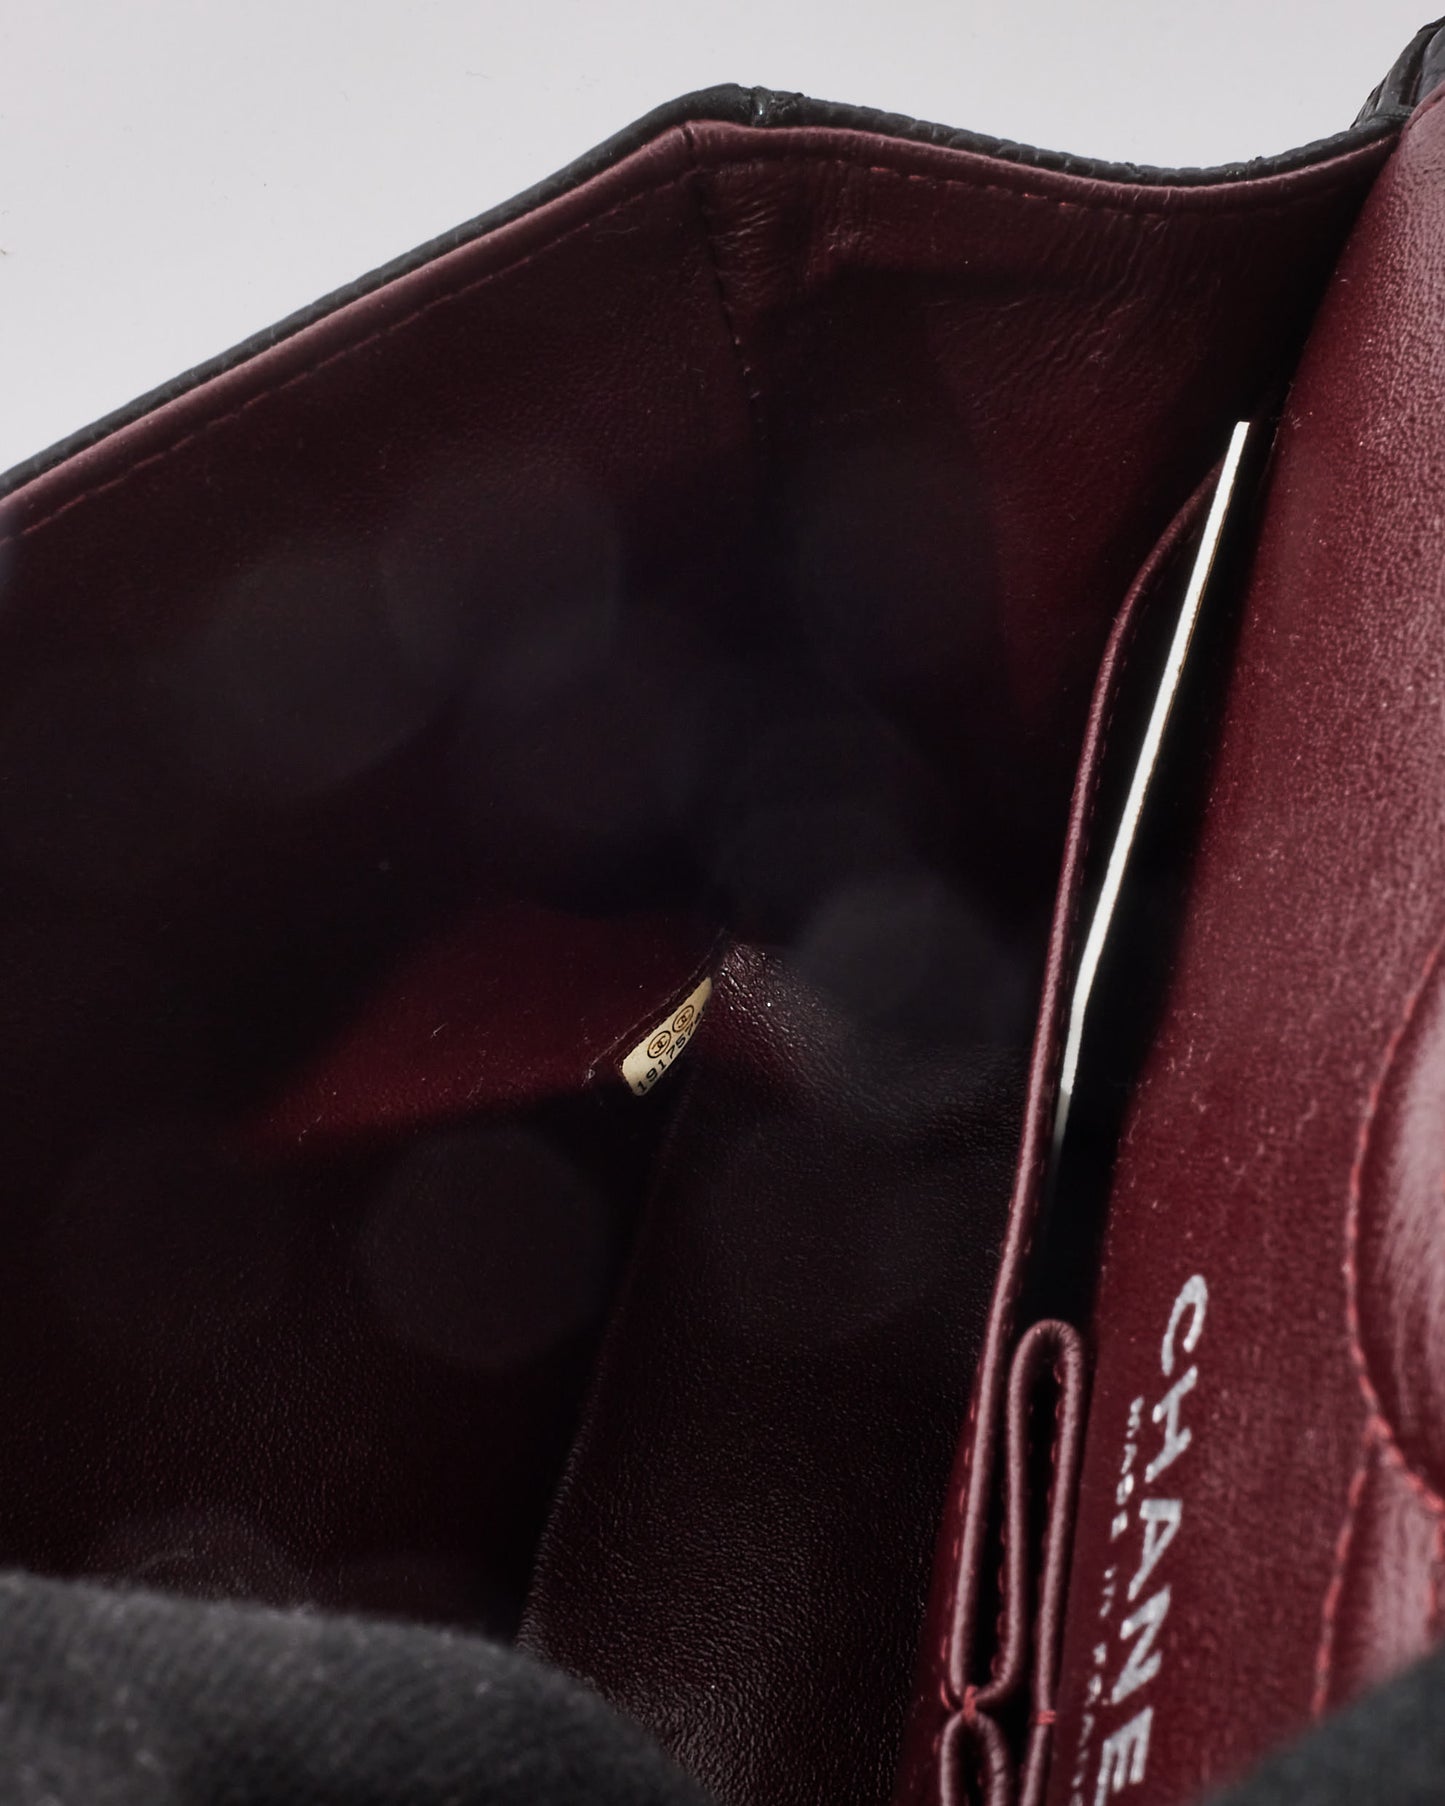 Chanel Black Caviar Leather Classic Medium Double Flap Bag SHW